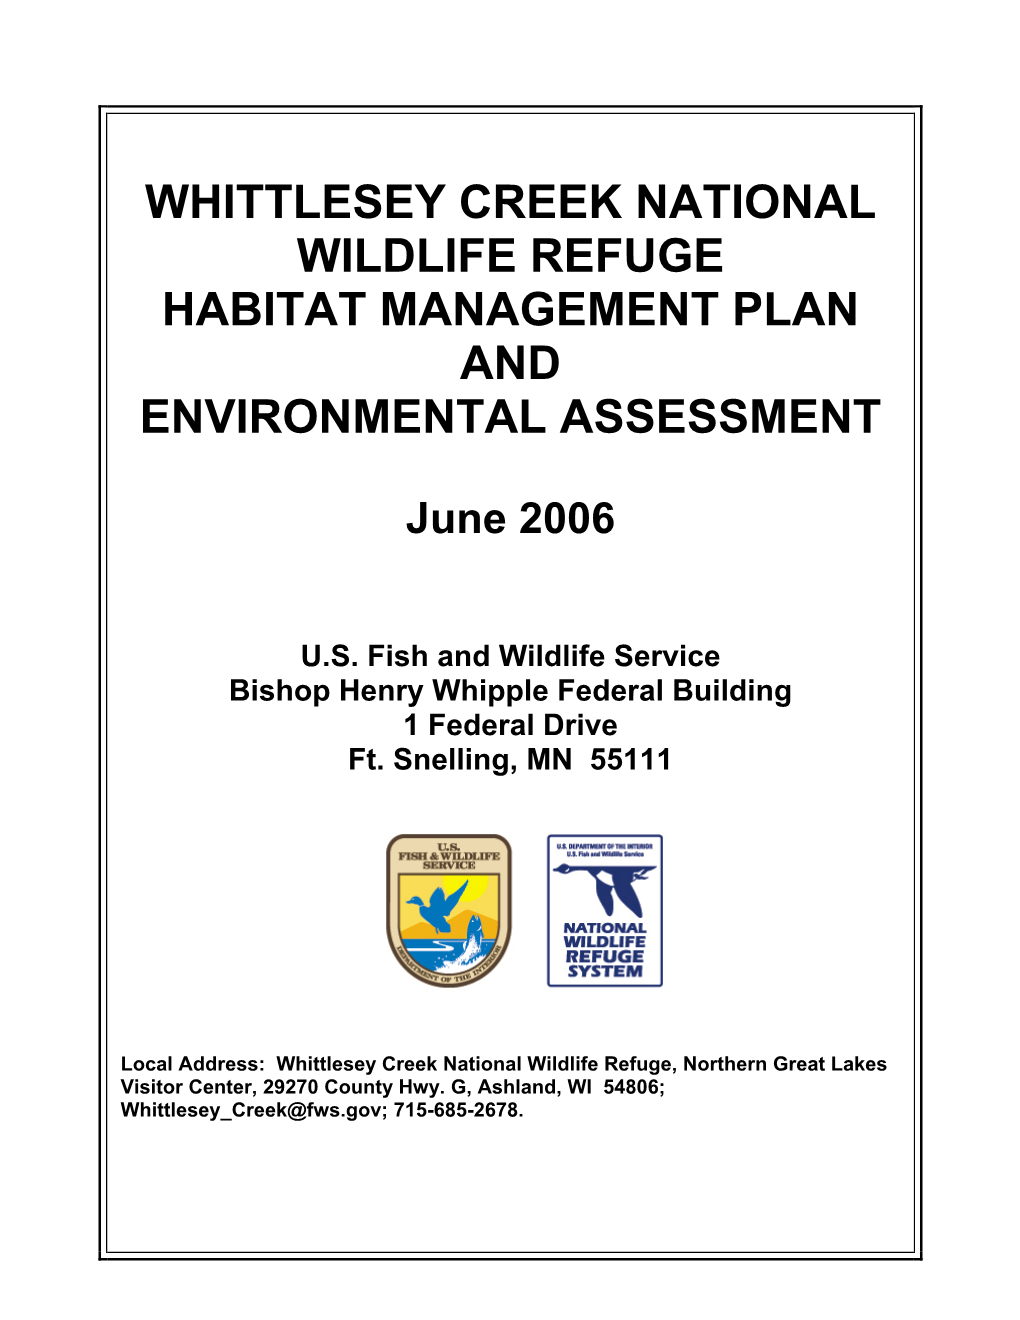 Whittlesey Creek National Wildlife Refuge Habitat Management Plan and Environmental Assessment